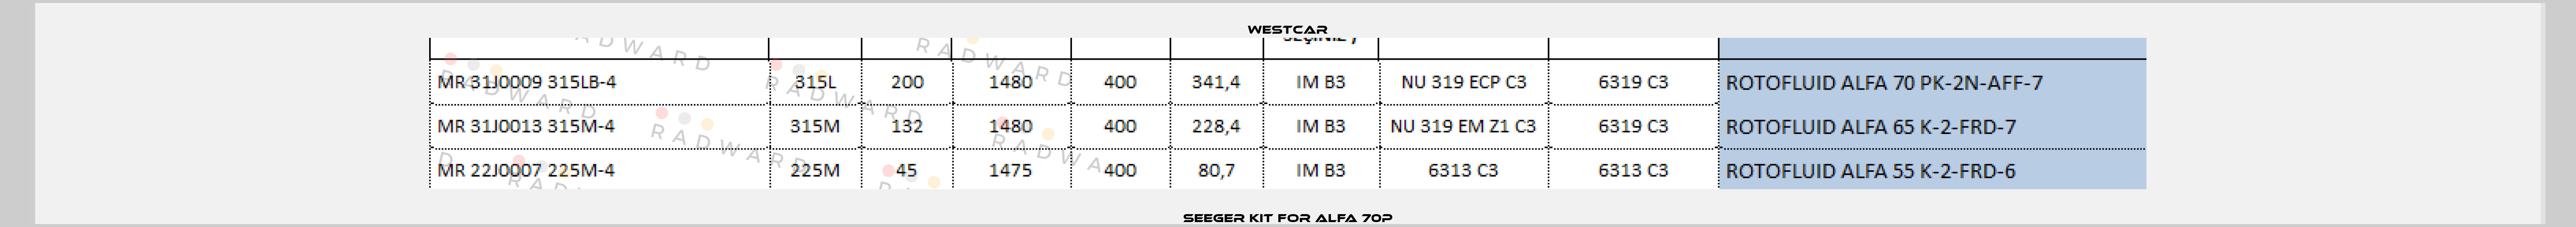 Seeger kit for Alfa 70P Westcar